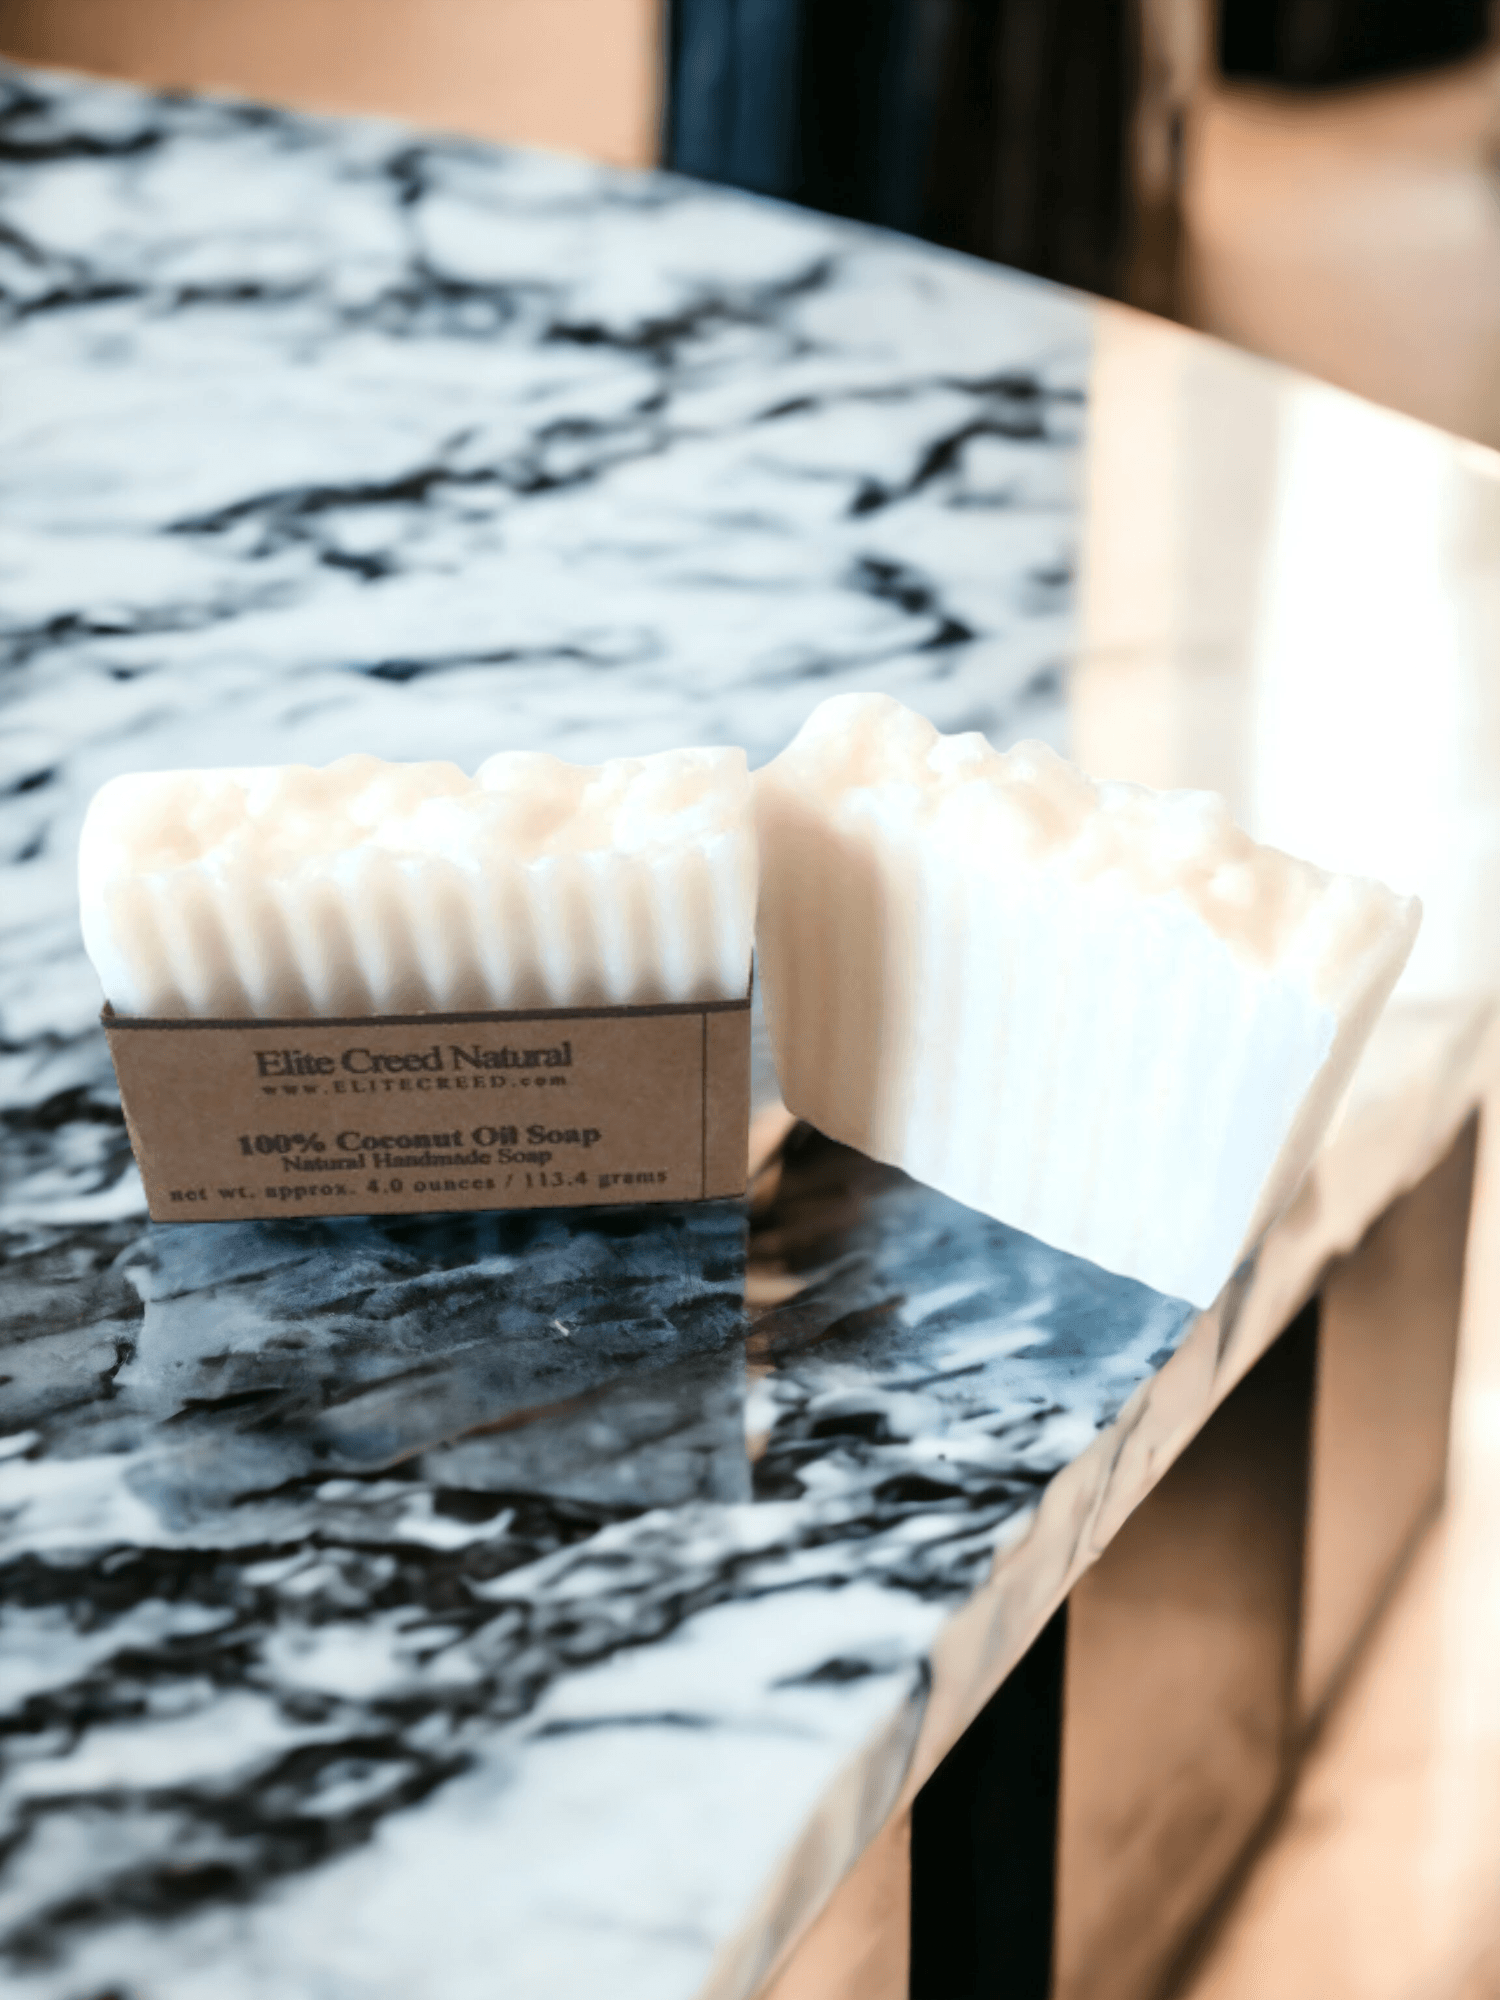 Coconut Oil Handmade Soap - Elite Creed Natural